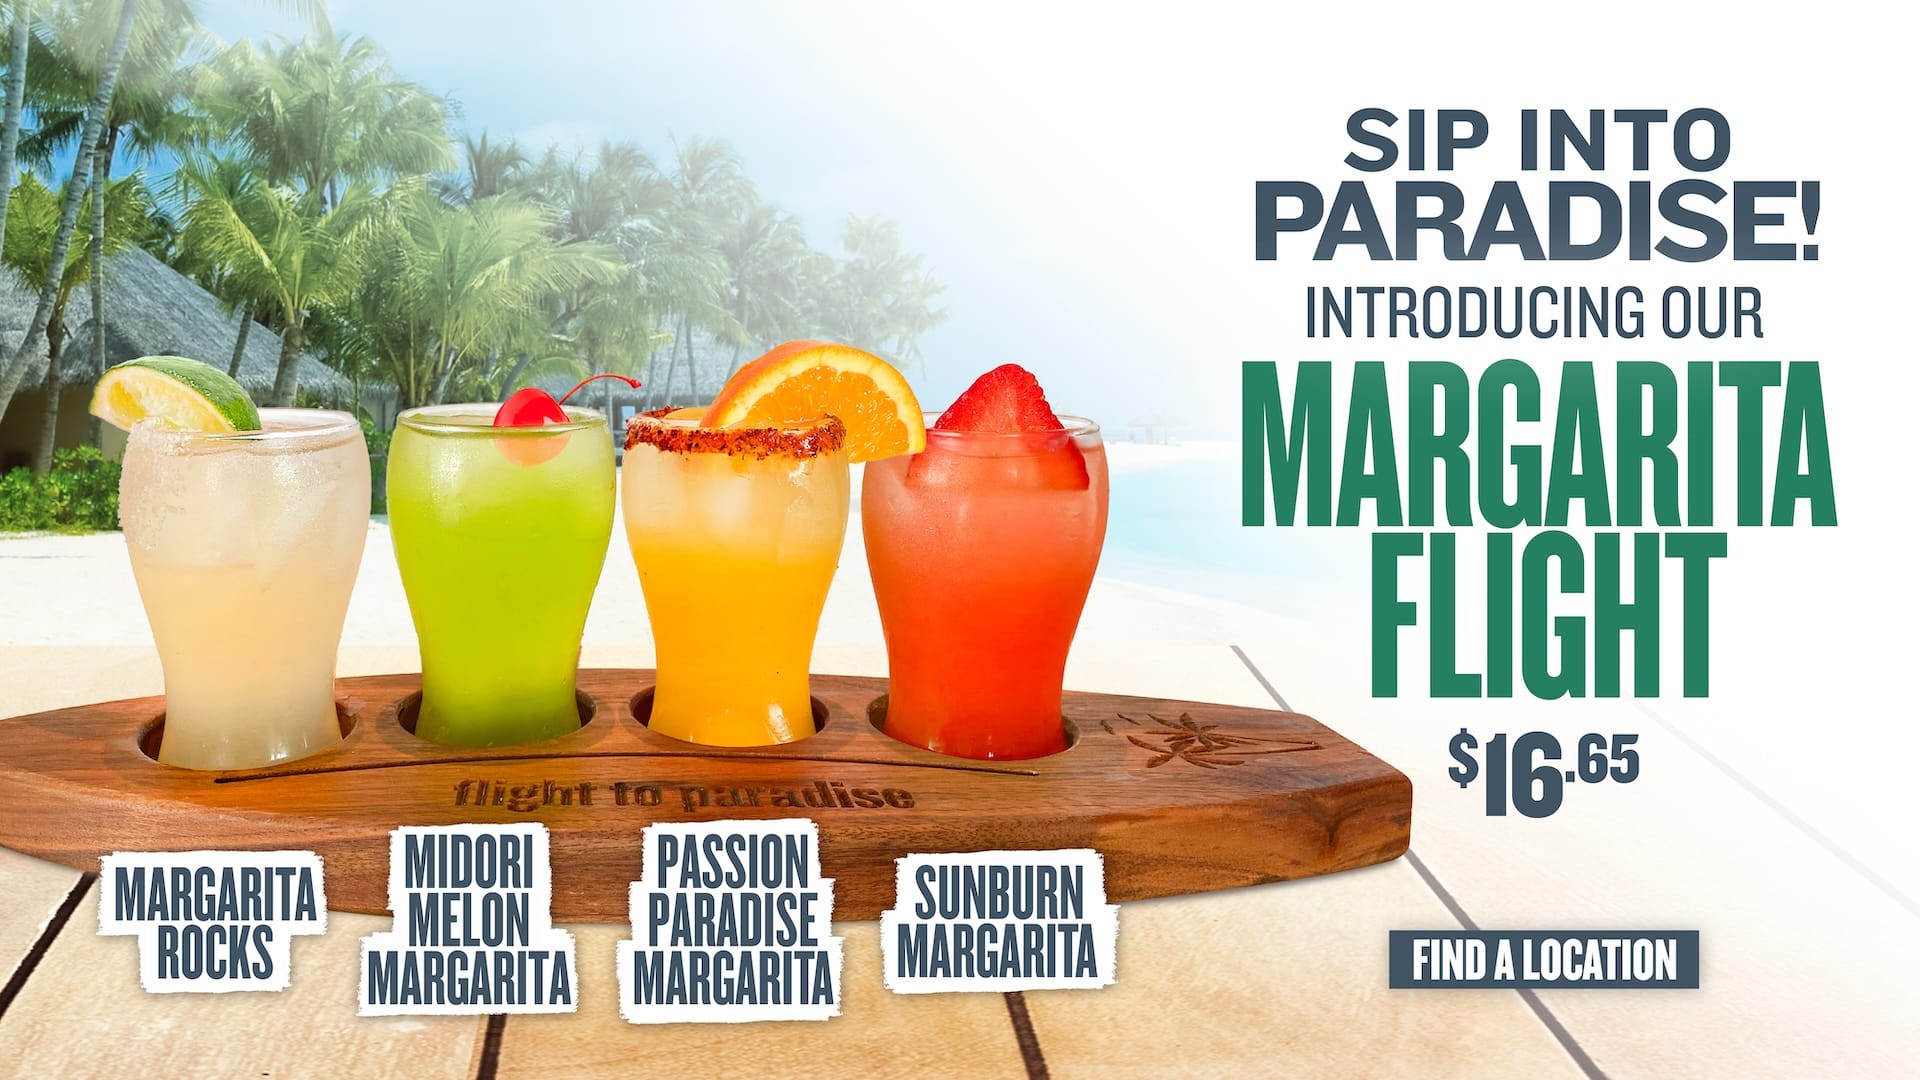 Sip into Paradise introducing our margarita flight $16.65 - Margarita Rocks - Midori Melon Margarita - Passion Paradise Margarita - Sunburn Margarita - Find a Location